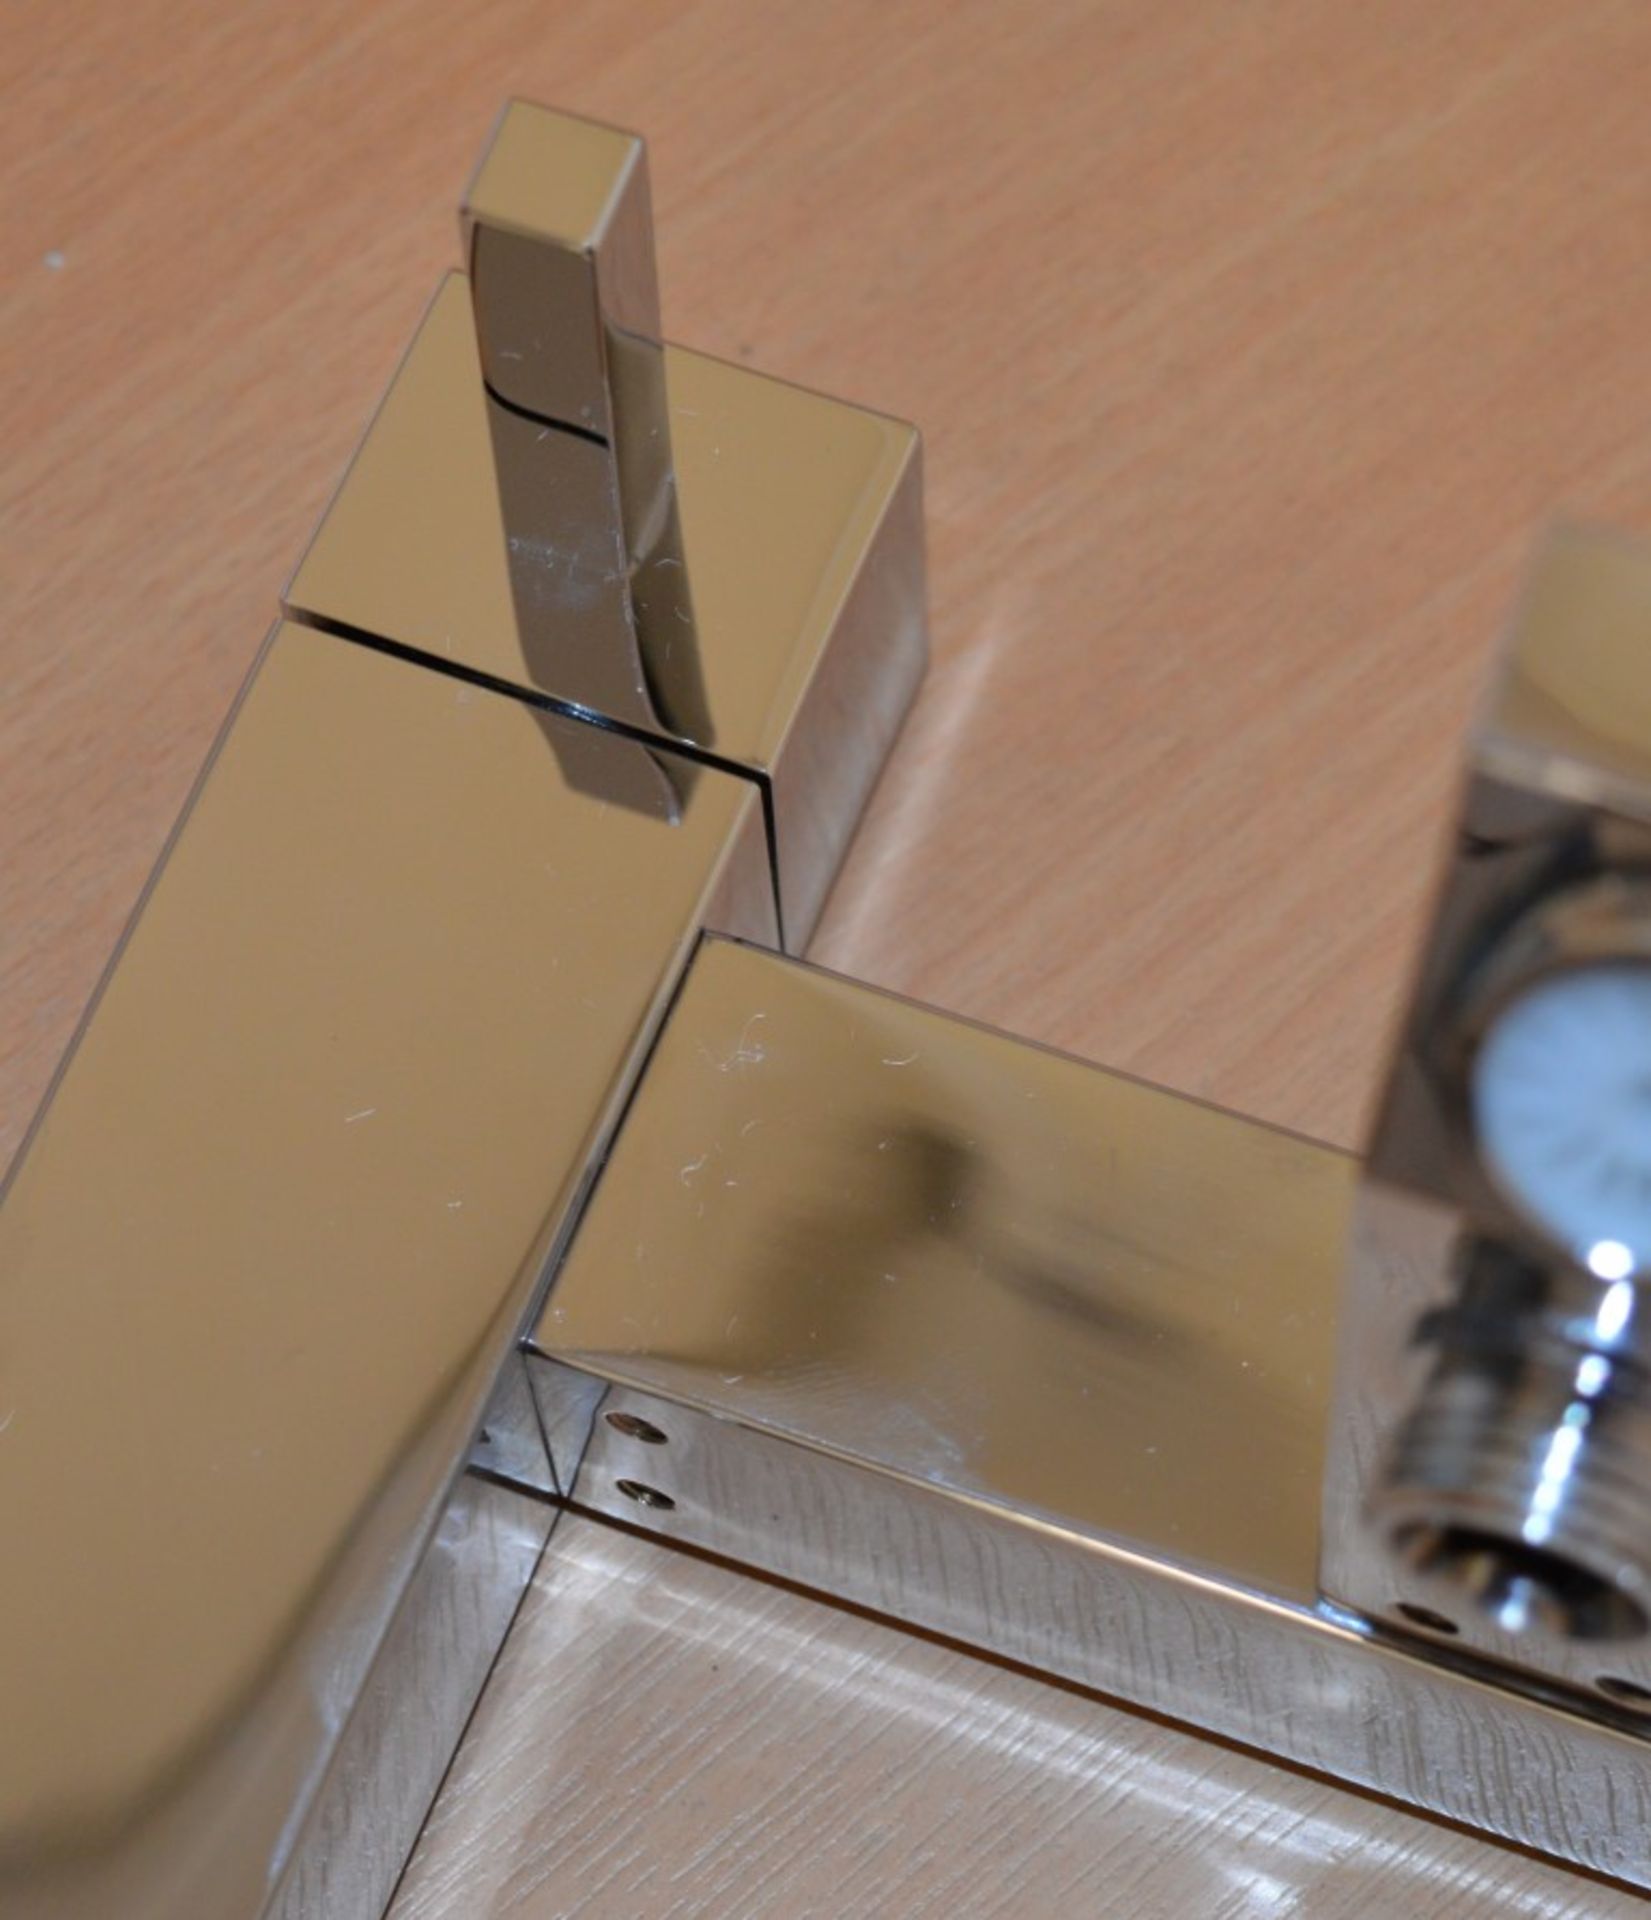 1 x Verona Deck Bath Shower Mixer Tap - Vogue Bathrooms - Modern Bath Mixer Tap in Bright Chrome - Image 4 of 14